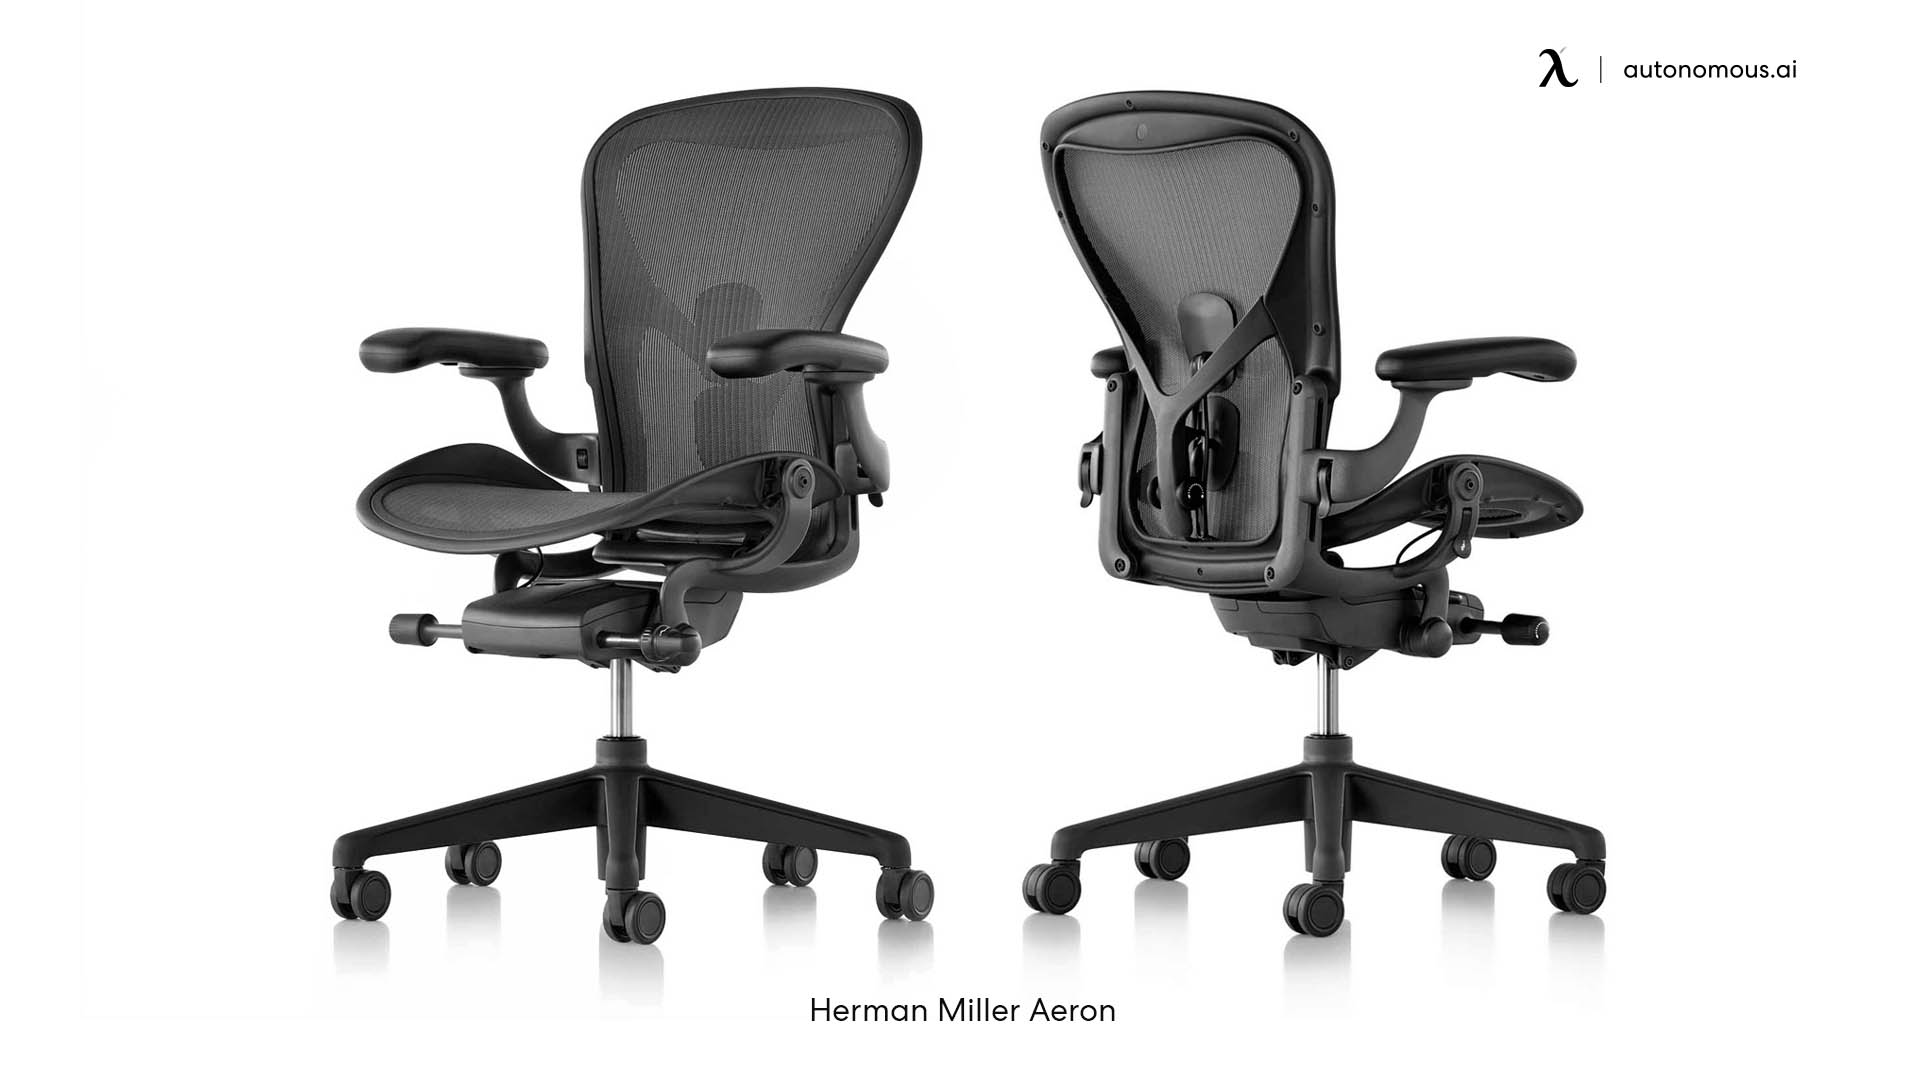 Herman Miller Aeron - Desk chair in Canada